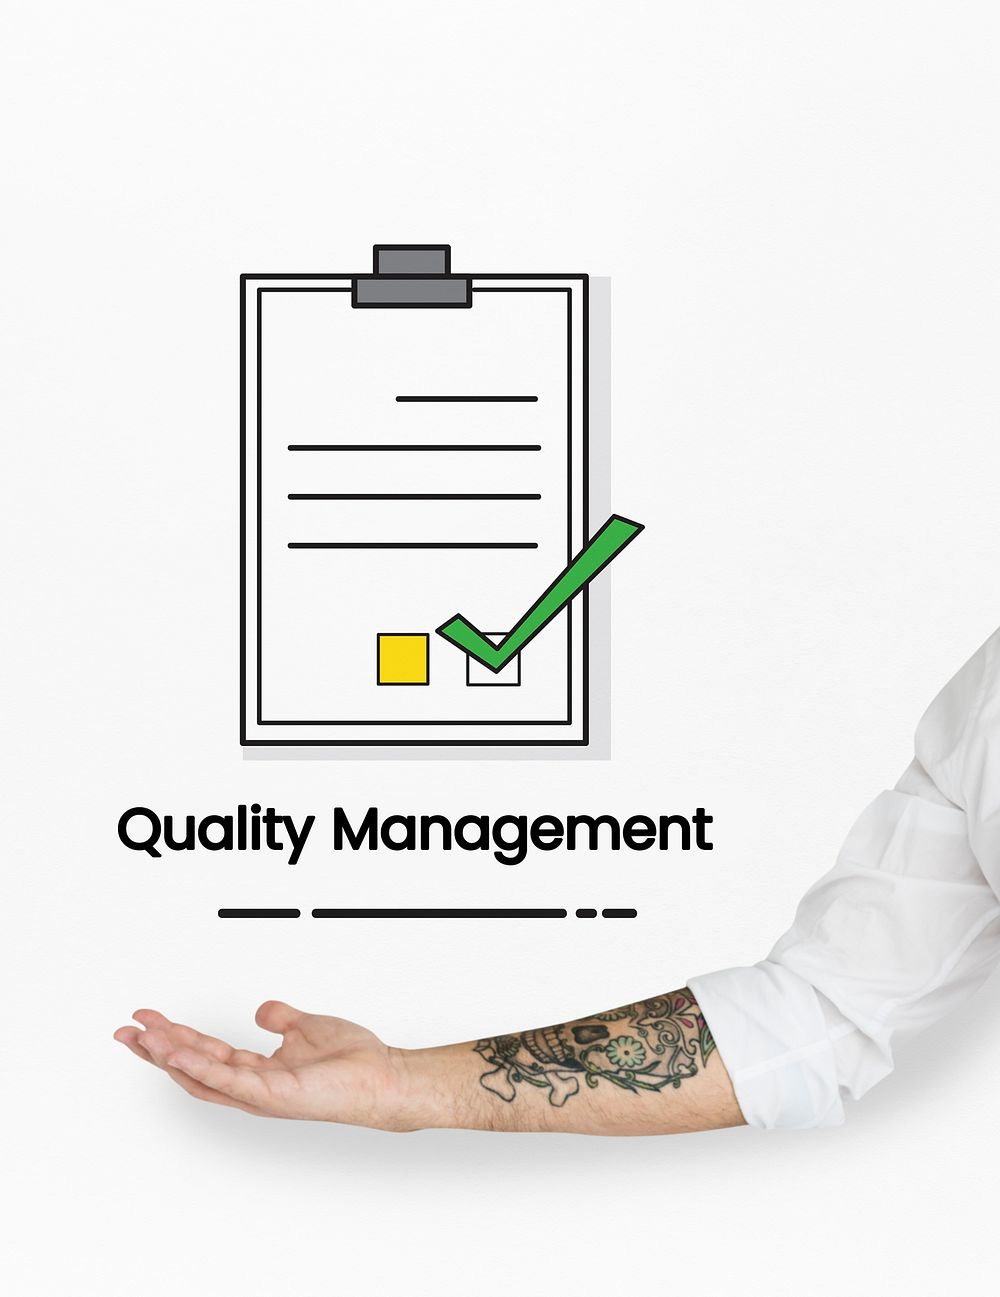 Best Quality Guarantee Assurance Concept